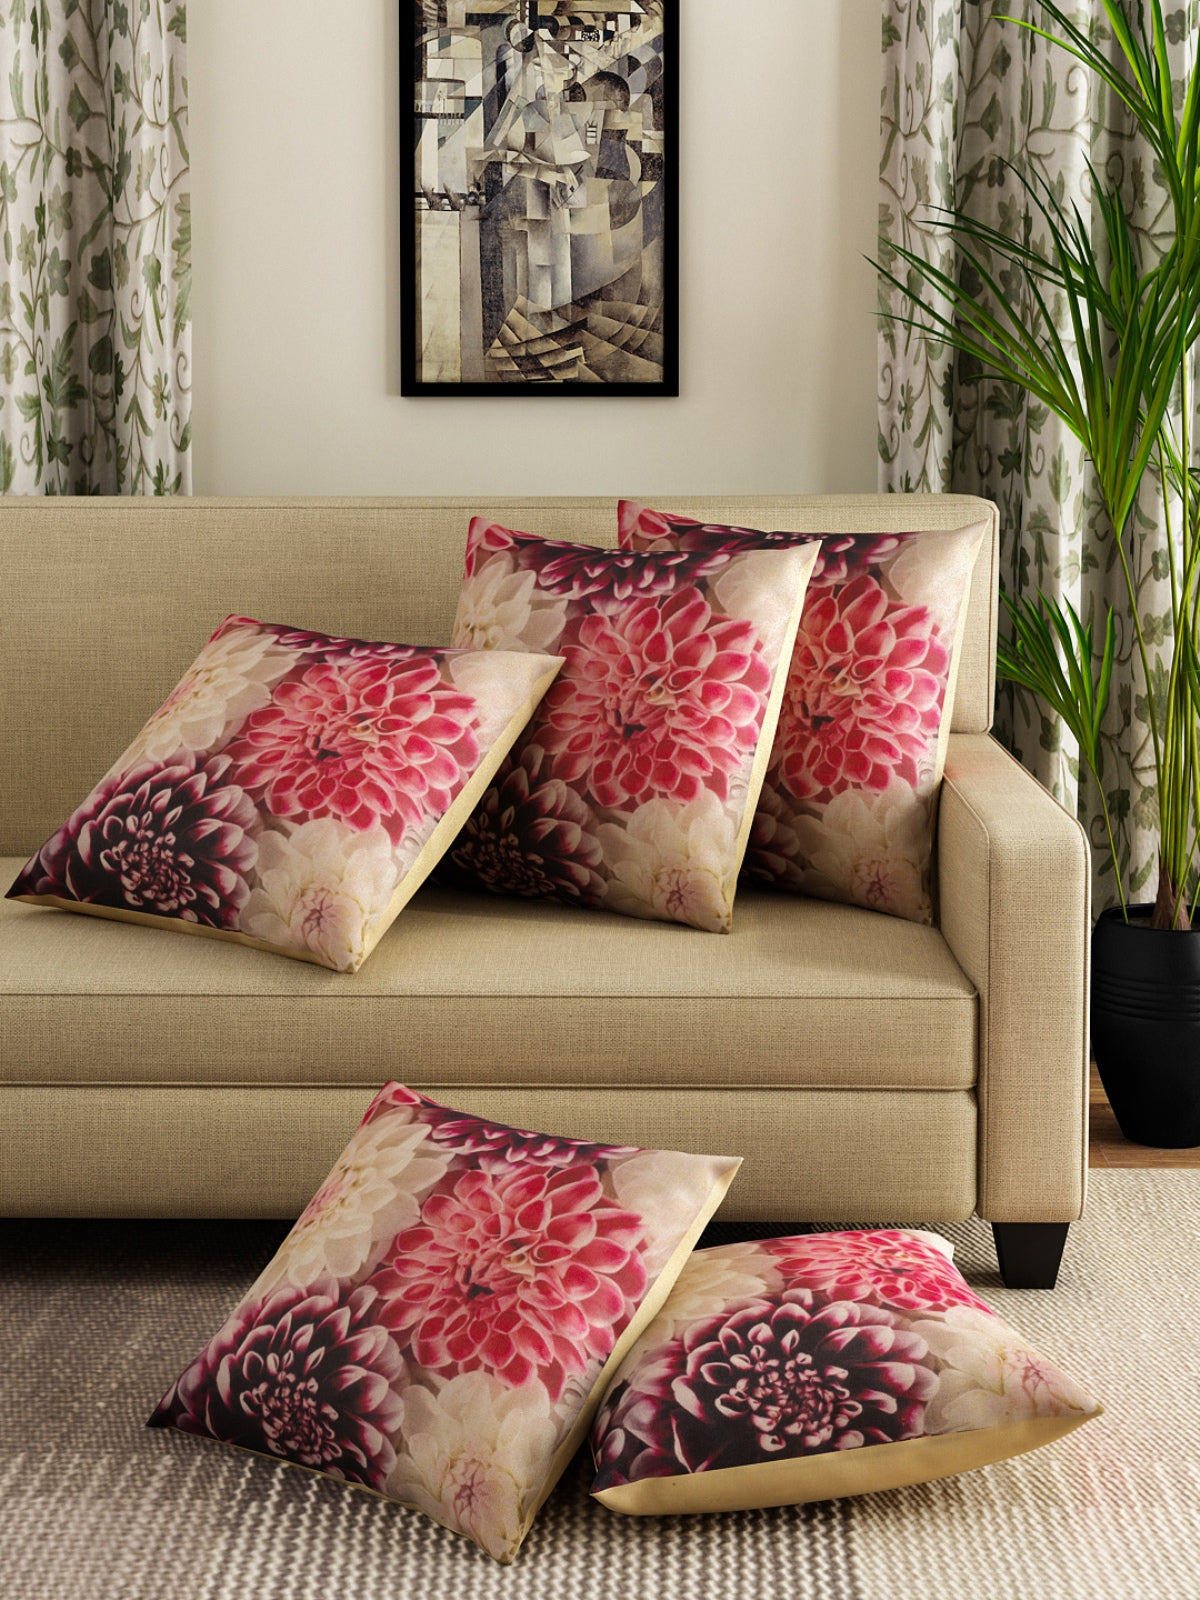 Soft Jute Floral Print Throw Pillow/Cushion Covers 40cm x 40cm Set of 5 - Multicolor